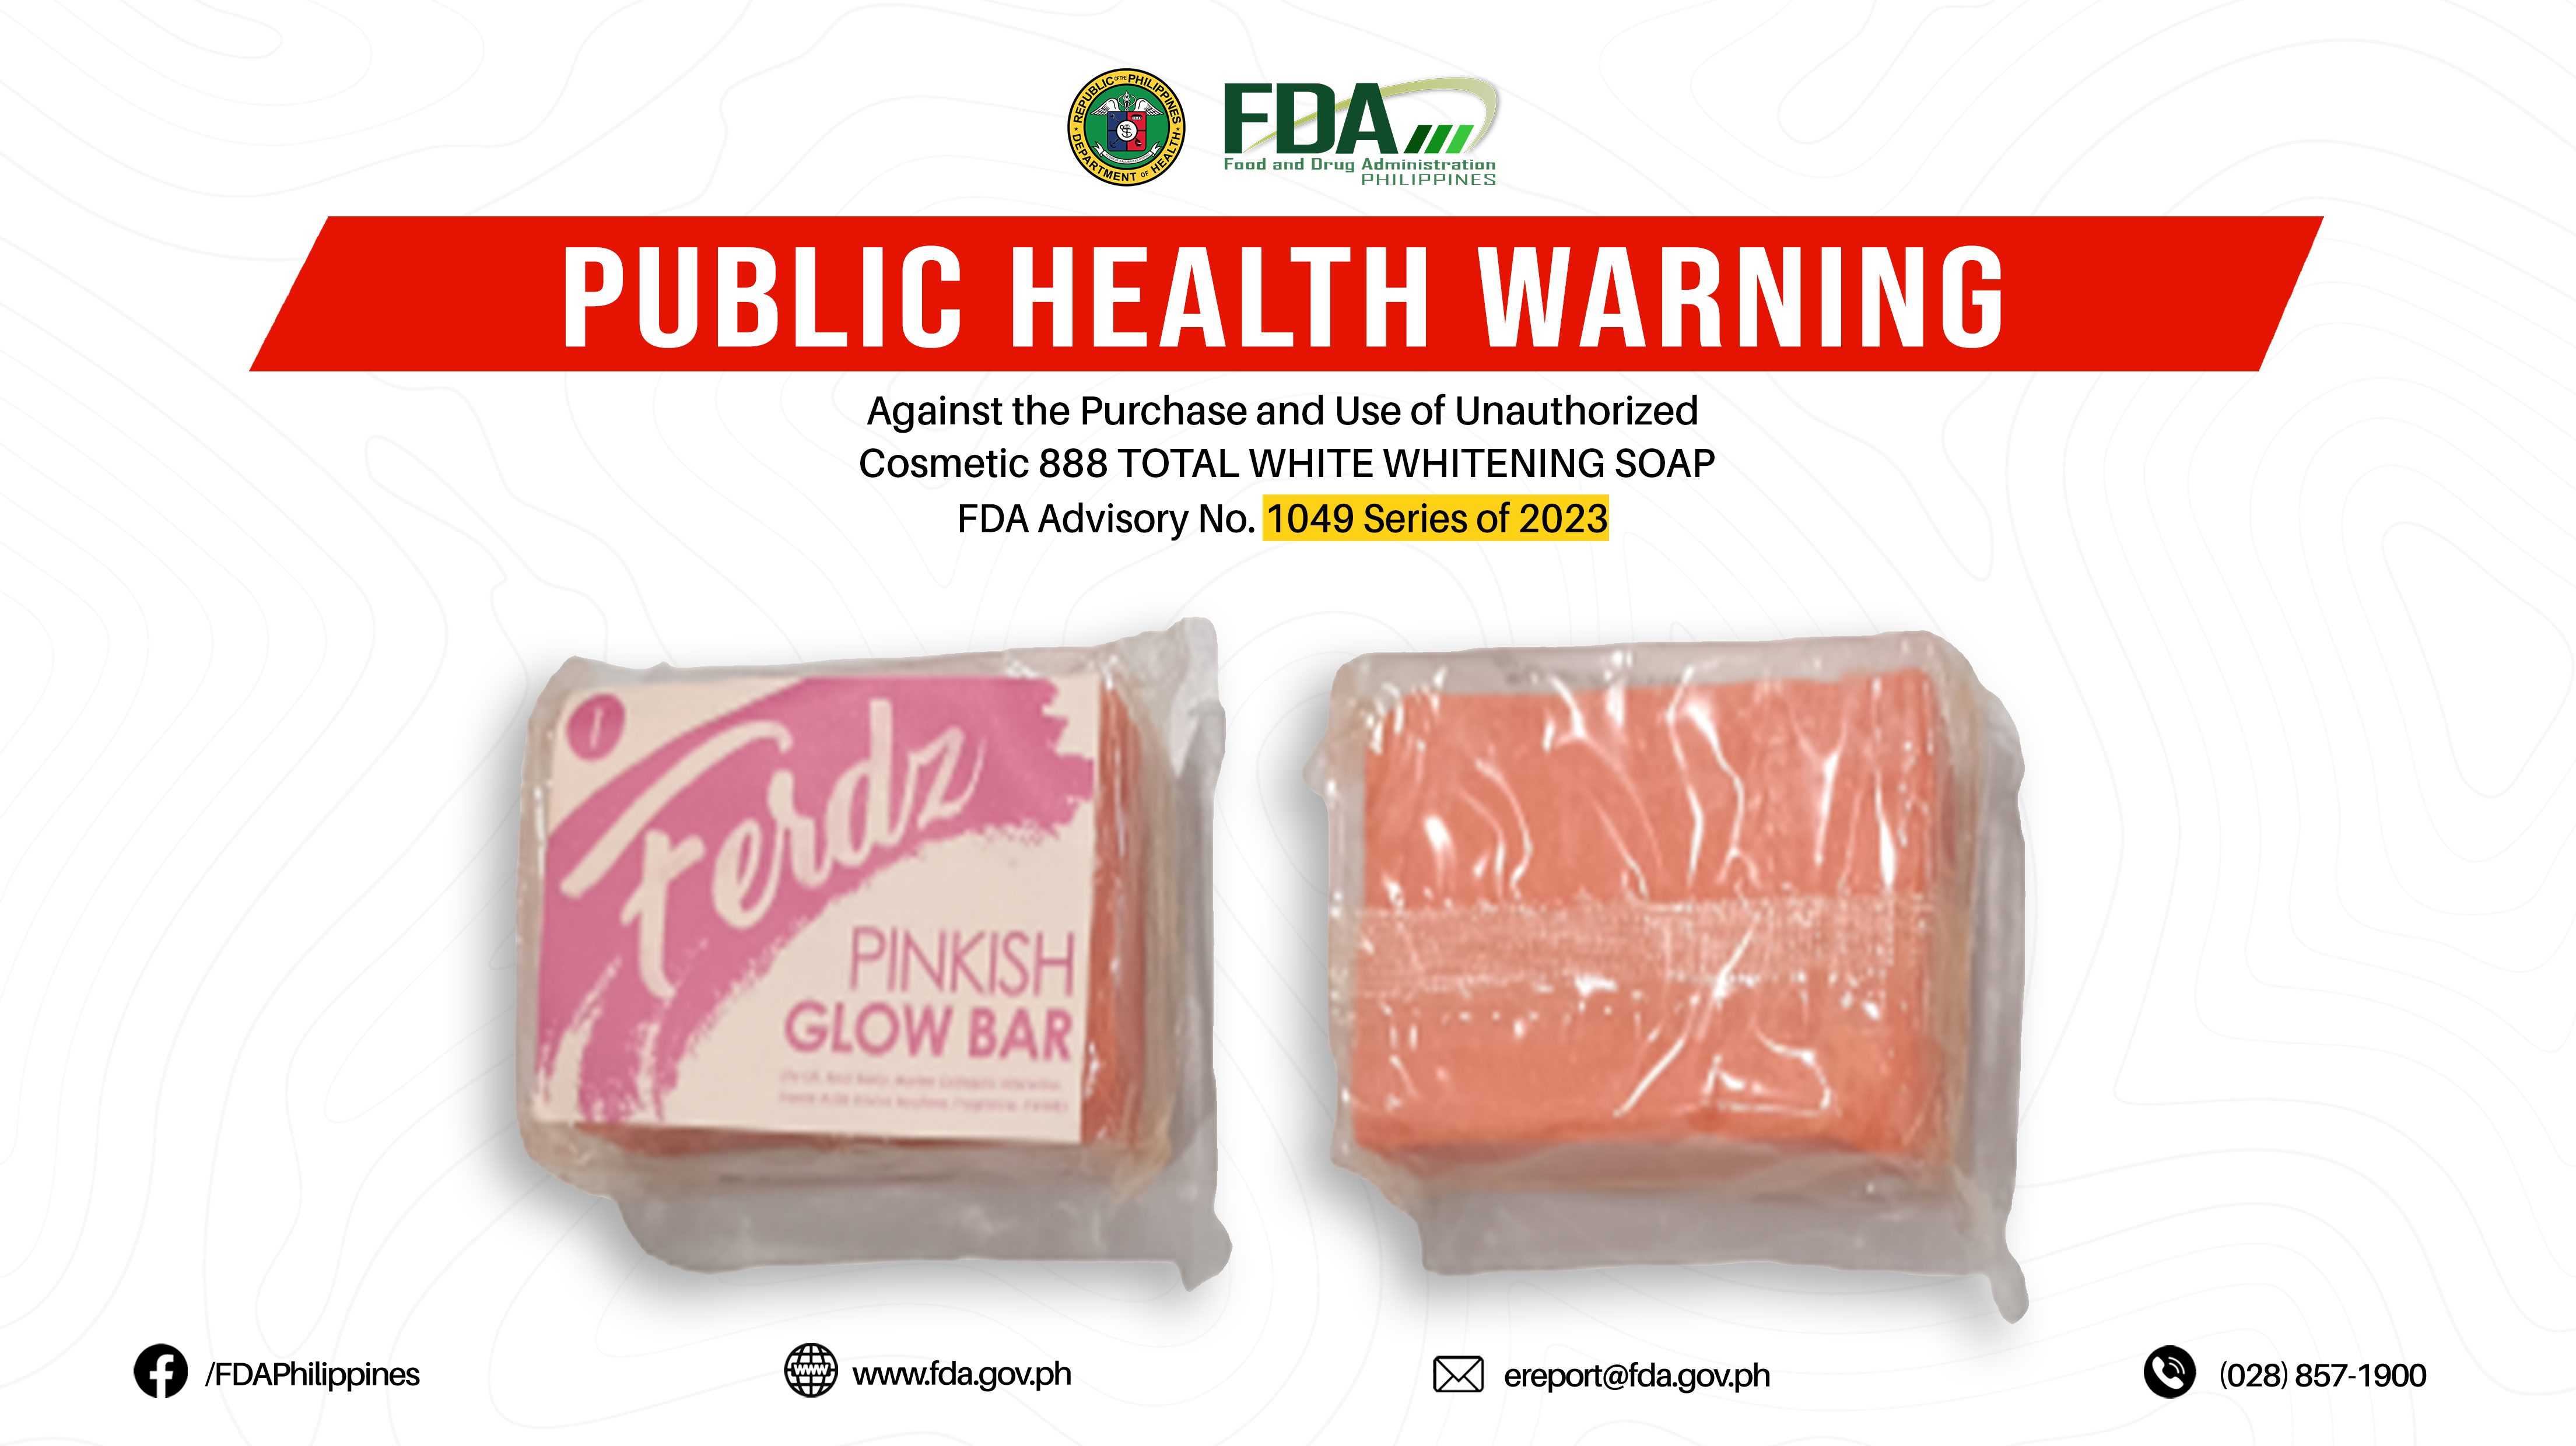 FDA Advisory No.2023-1049 || Public Health Warning Against the Purchase and Use of Unauthorized Cosmetic FERDZ PINKISH GLOW BAR